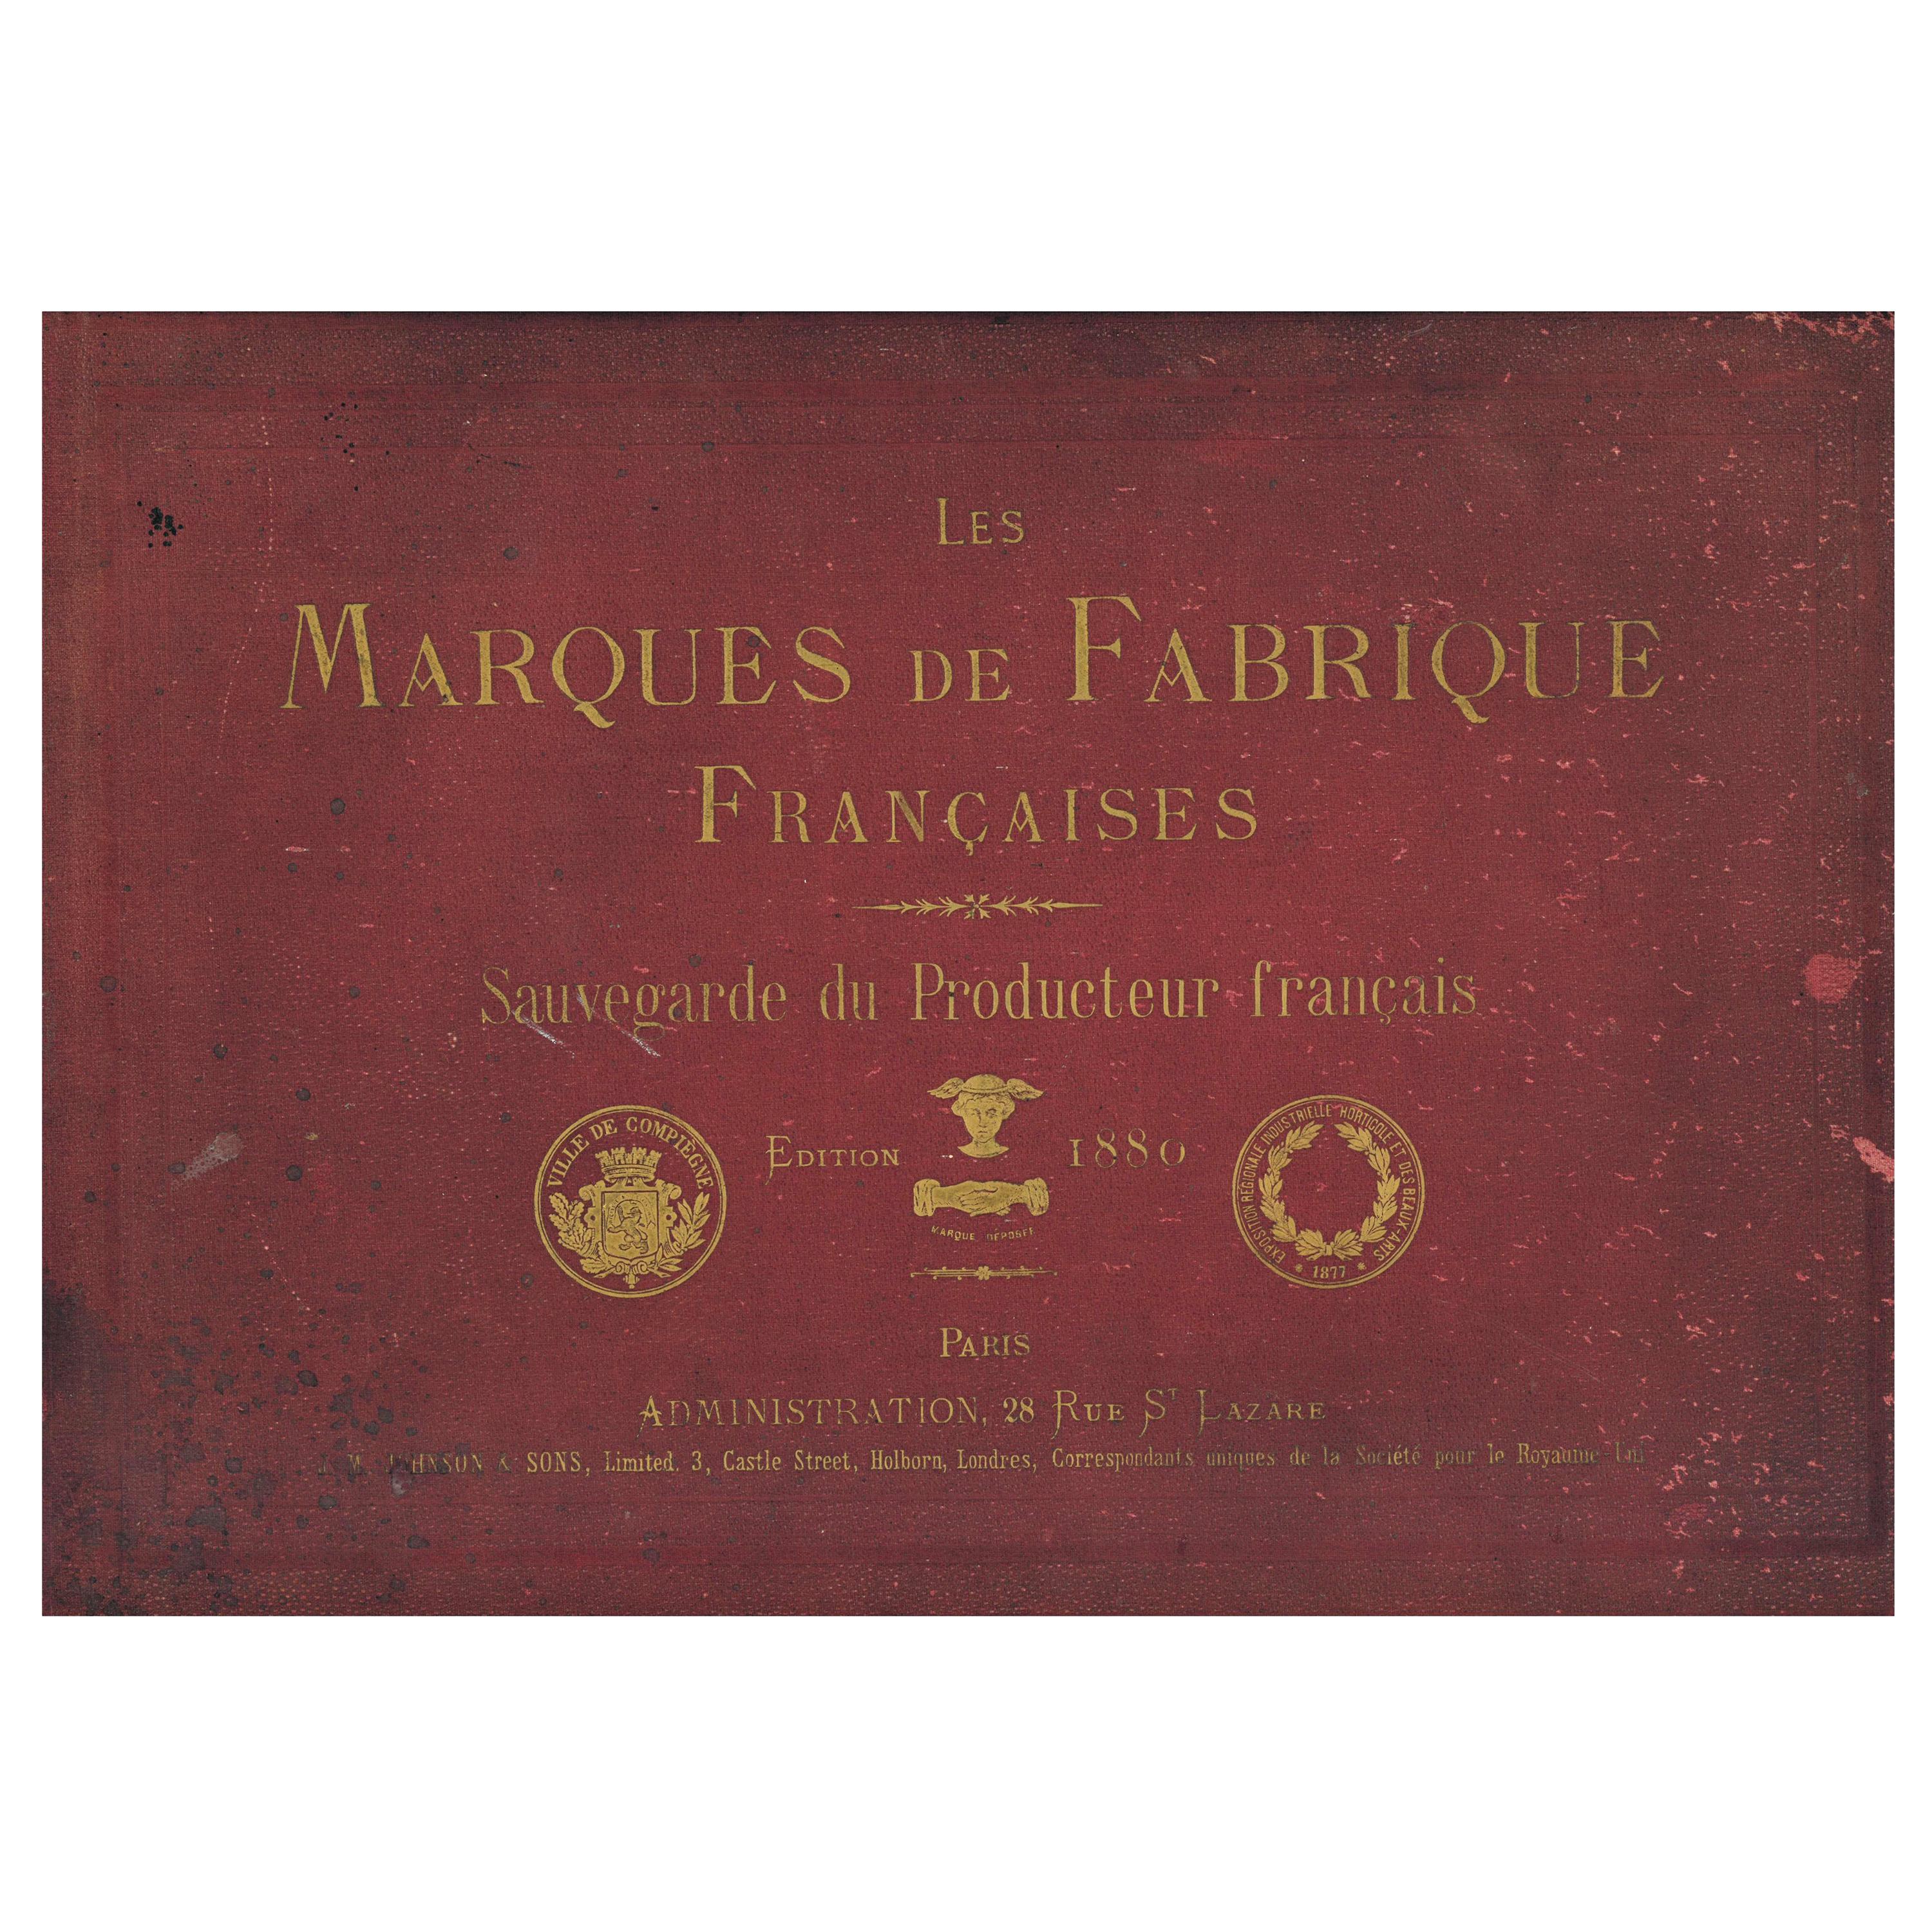 Les Marques de Fabrique Francaises (Book)